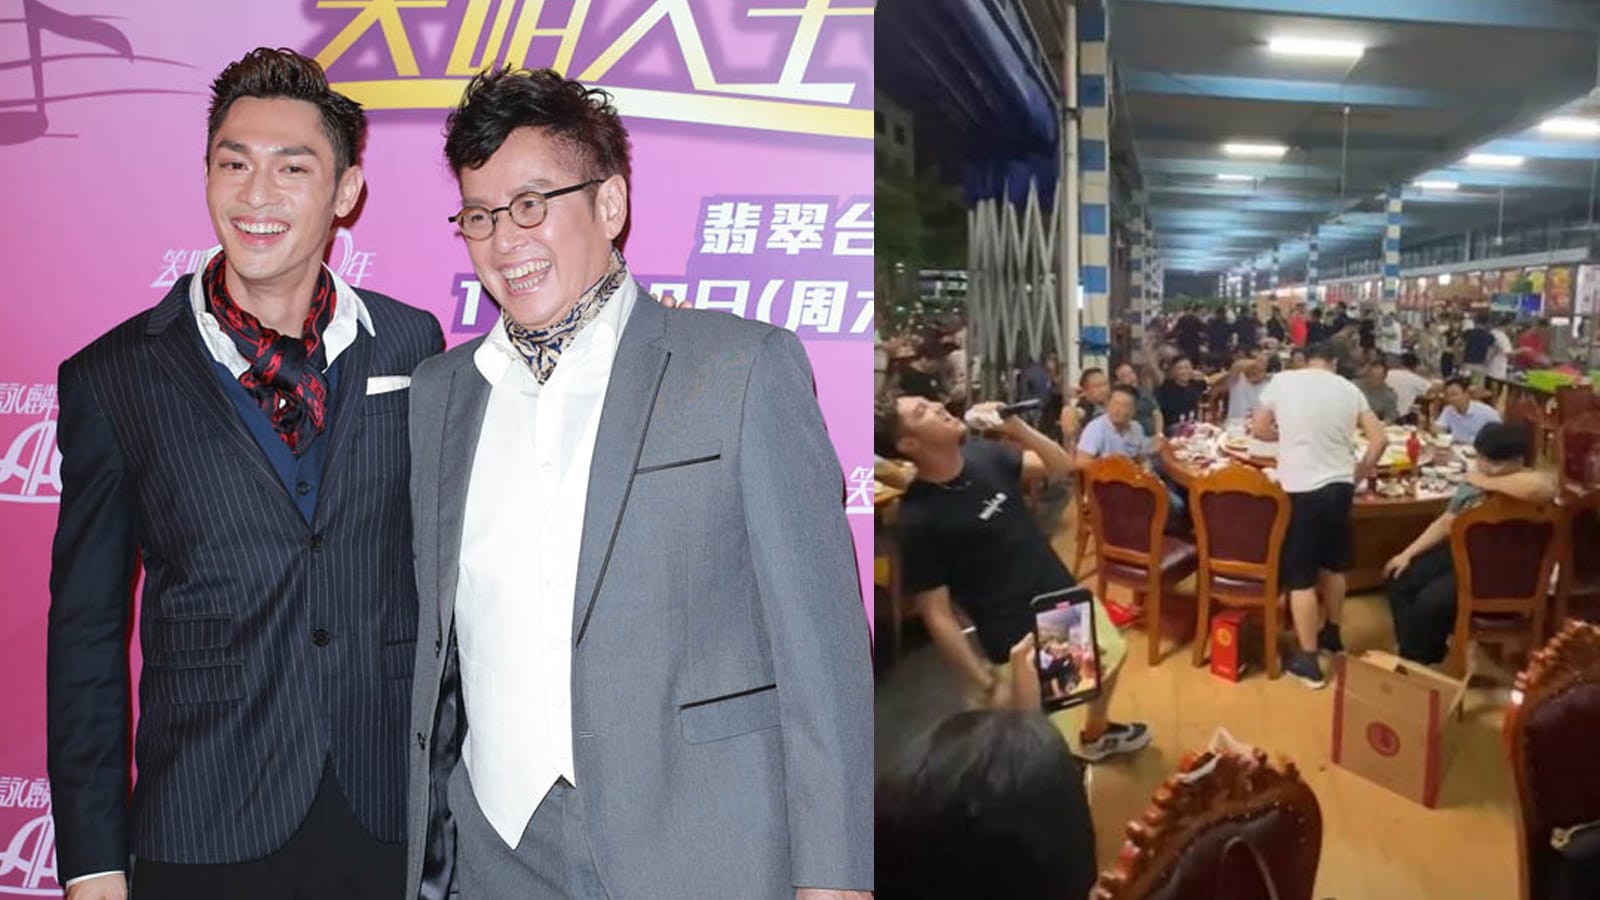 Alan Tam’s Godson, Singer Kelvin Kwan, Seen Performing At Food Court In China 12 Years After Drug Scandal